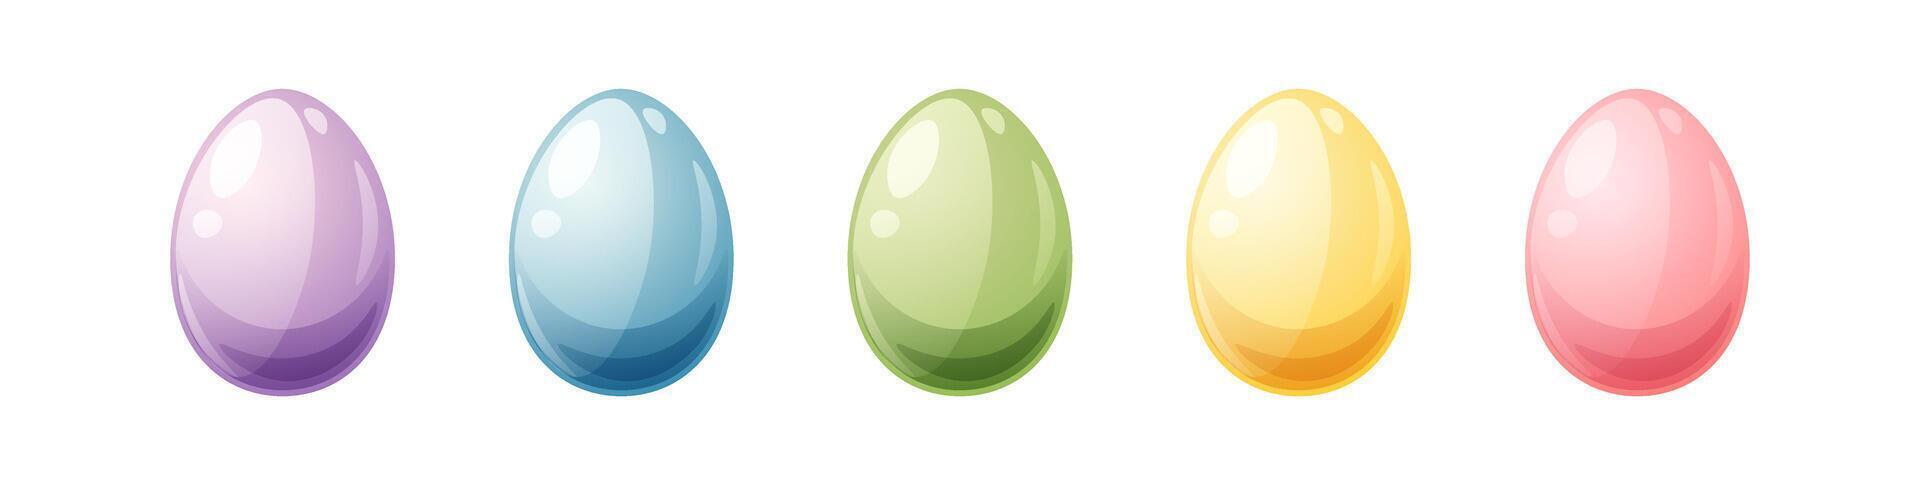 Pascua de Resurrección huevos en aislado antecedentes. un conjunto de vistoso pollo huevos. genial para decoración, diseño, pegatinas para contento Pascua de Resurrección. vector